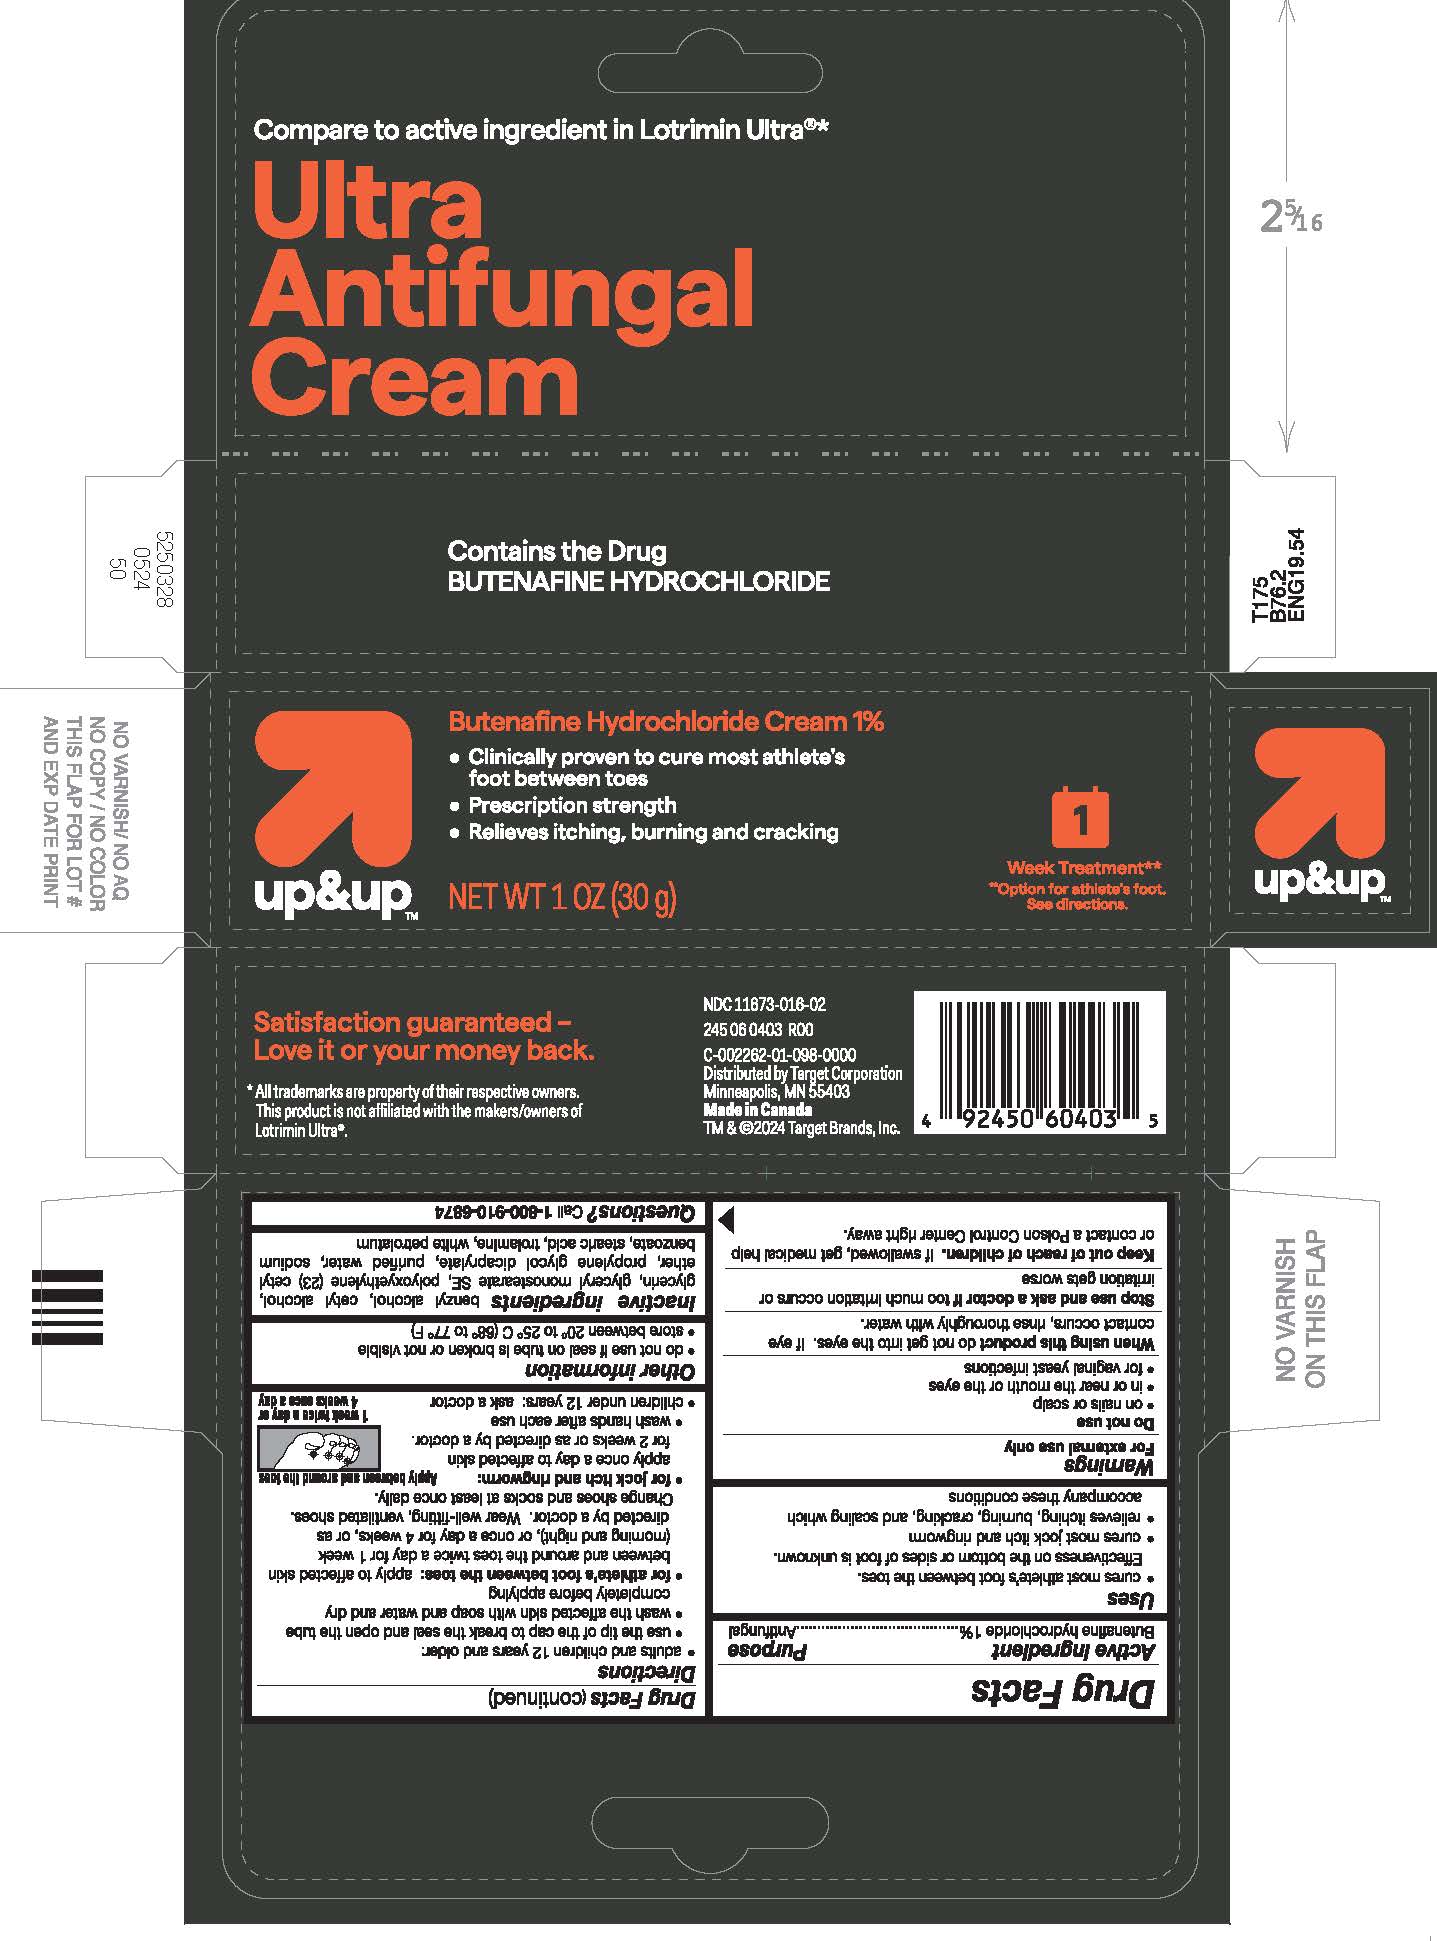 antifungal-02